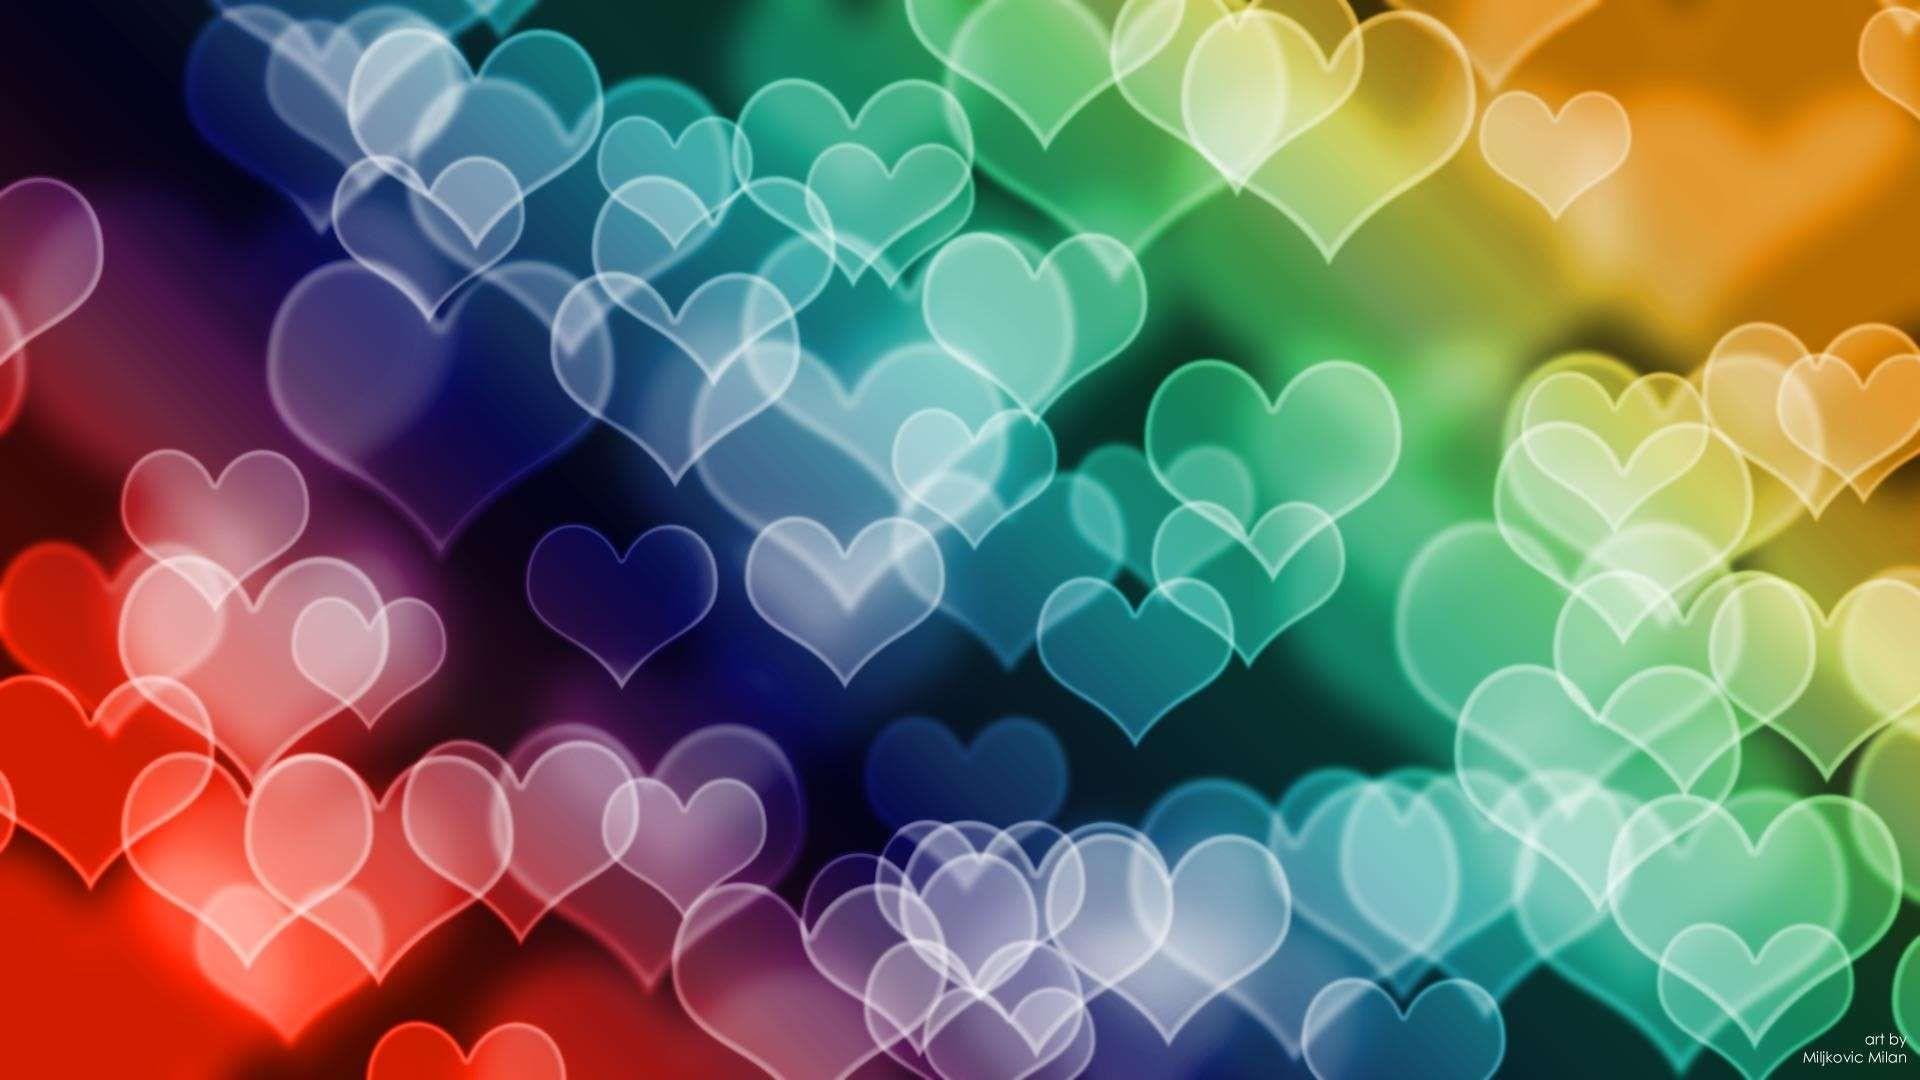 Rainbow Heart Wallpaper